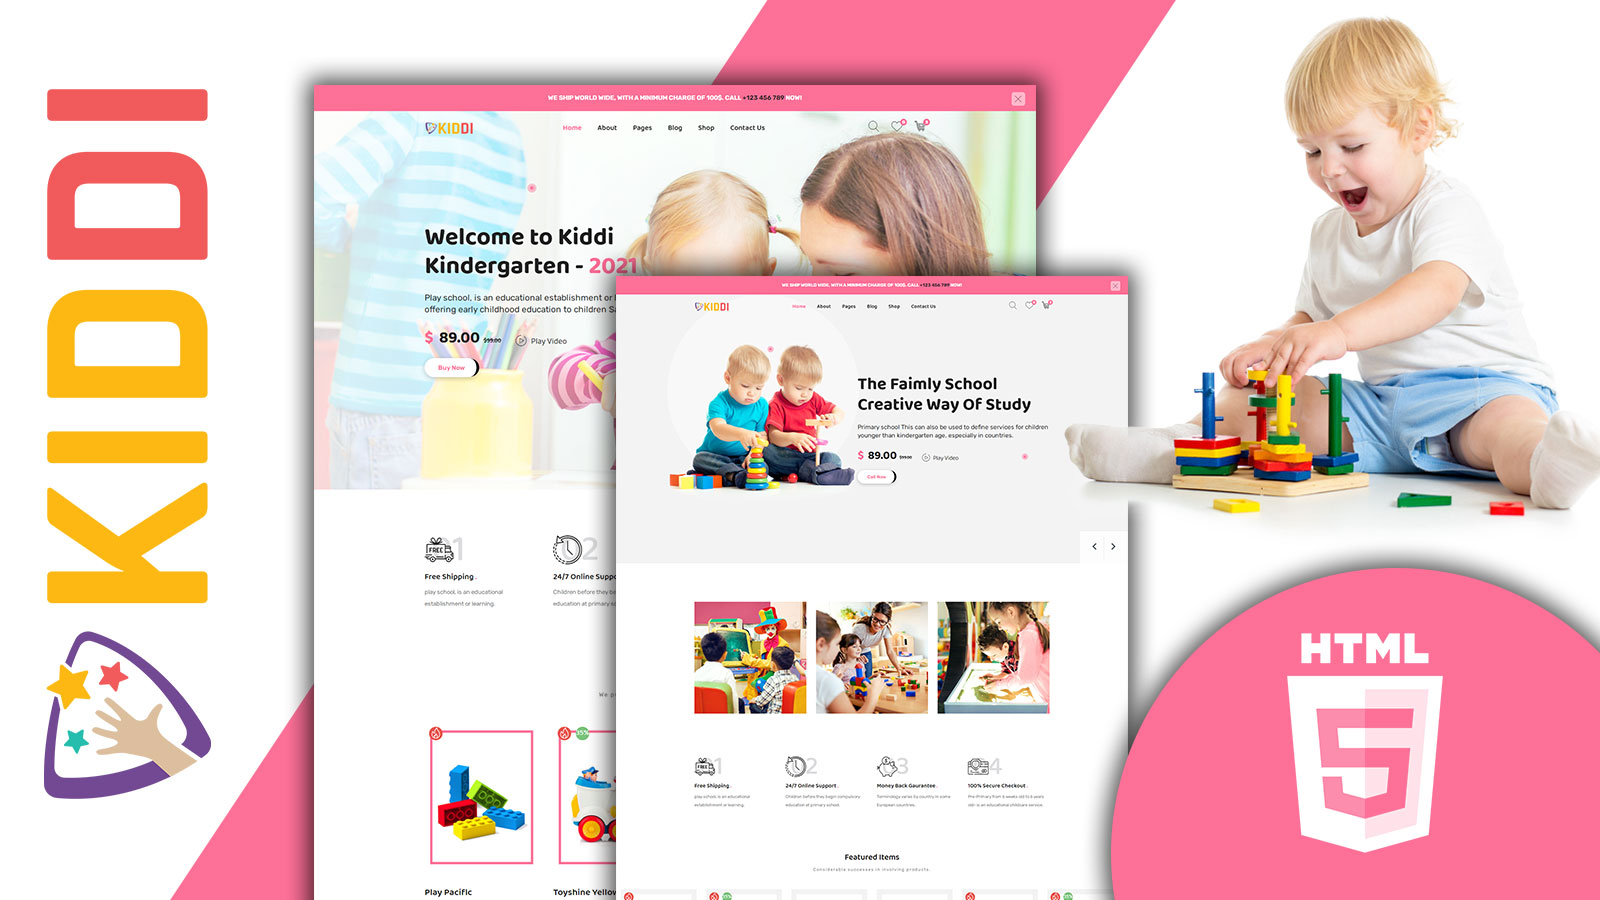 Kiddi Colorful Kids Store HTML5 Website template